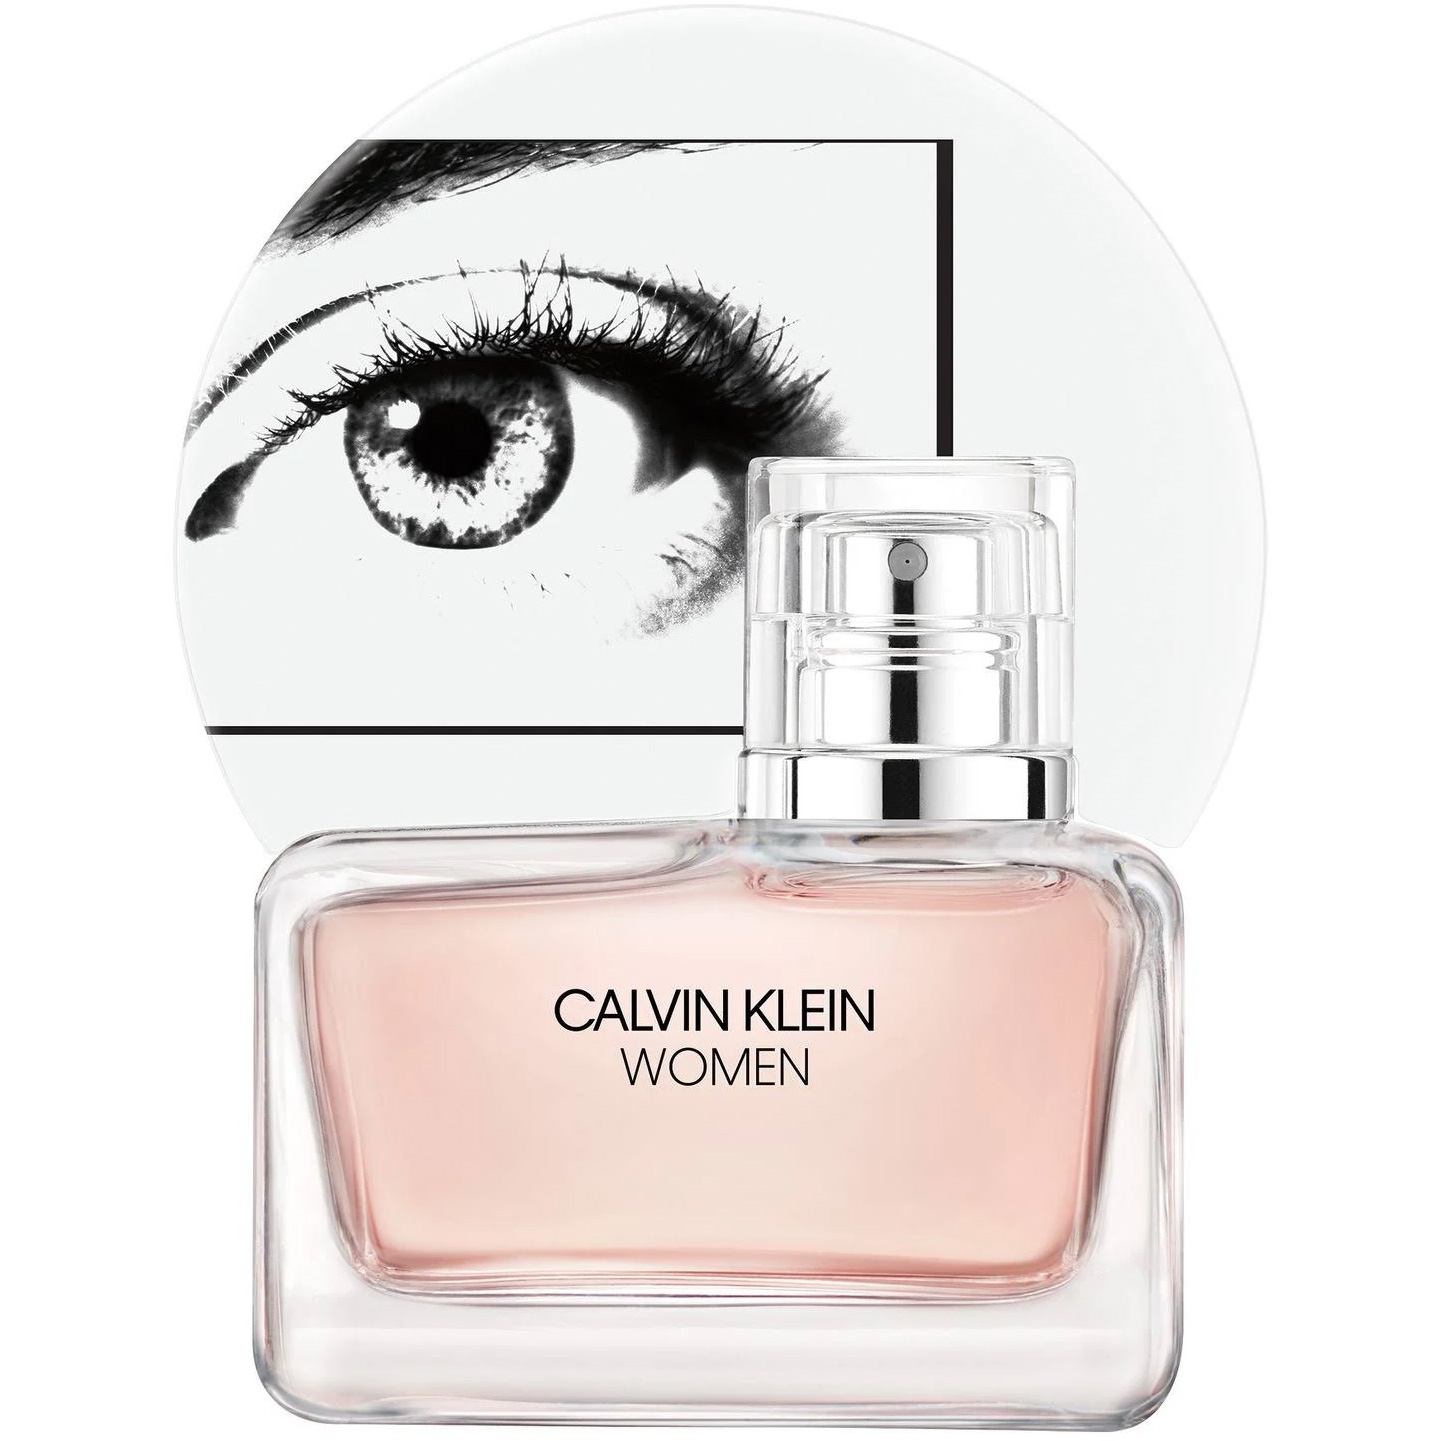 Image of Eau de parfum donna Calvin Klein Women 50 ml